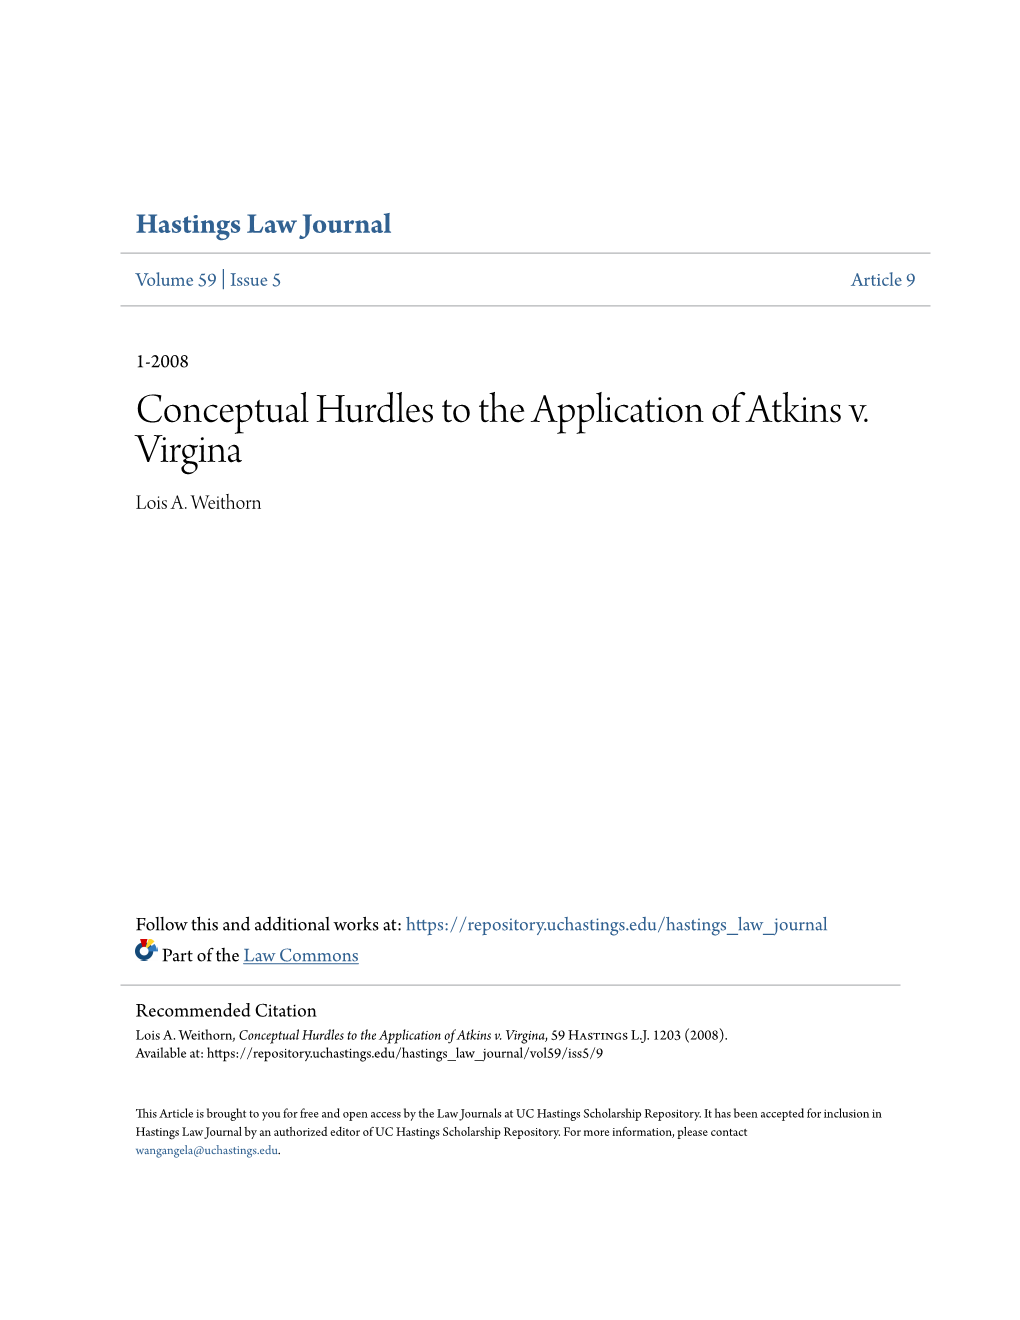 Conceptual Hurdles to the Application of Atkins V. Virgina Lois A